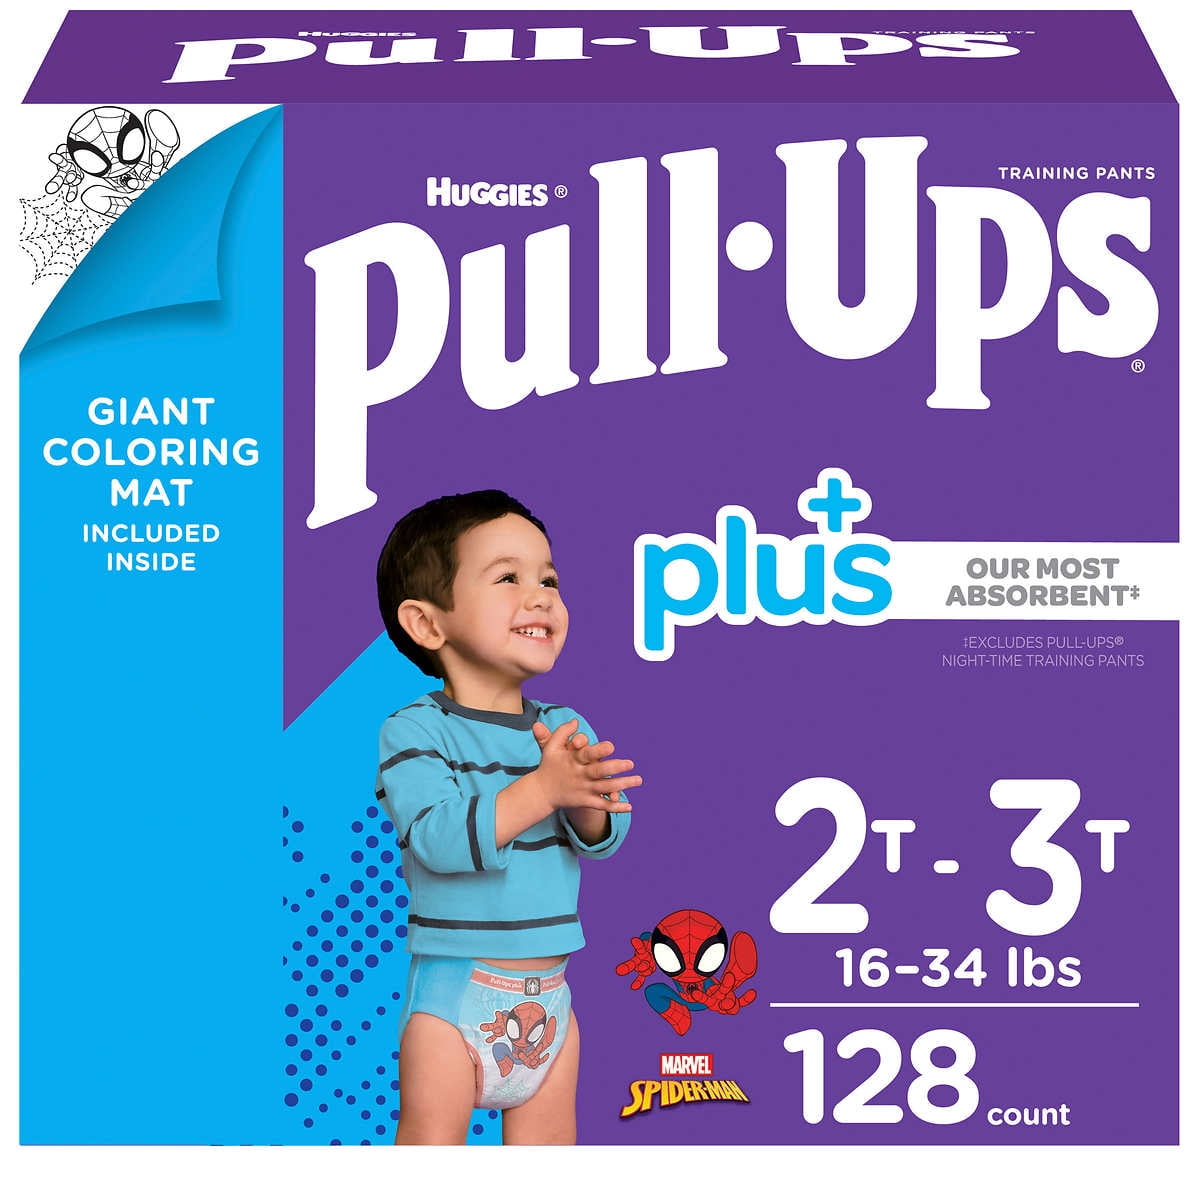  Pull-Ups Boys' Potty Training Pants, 3T-4T (32-40 lbs